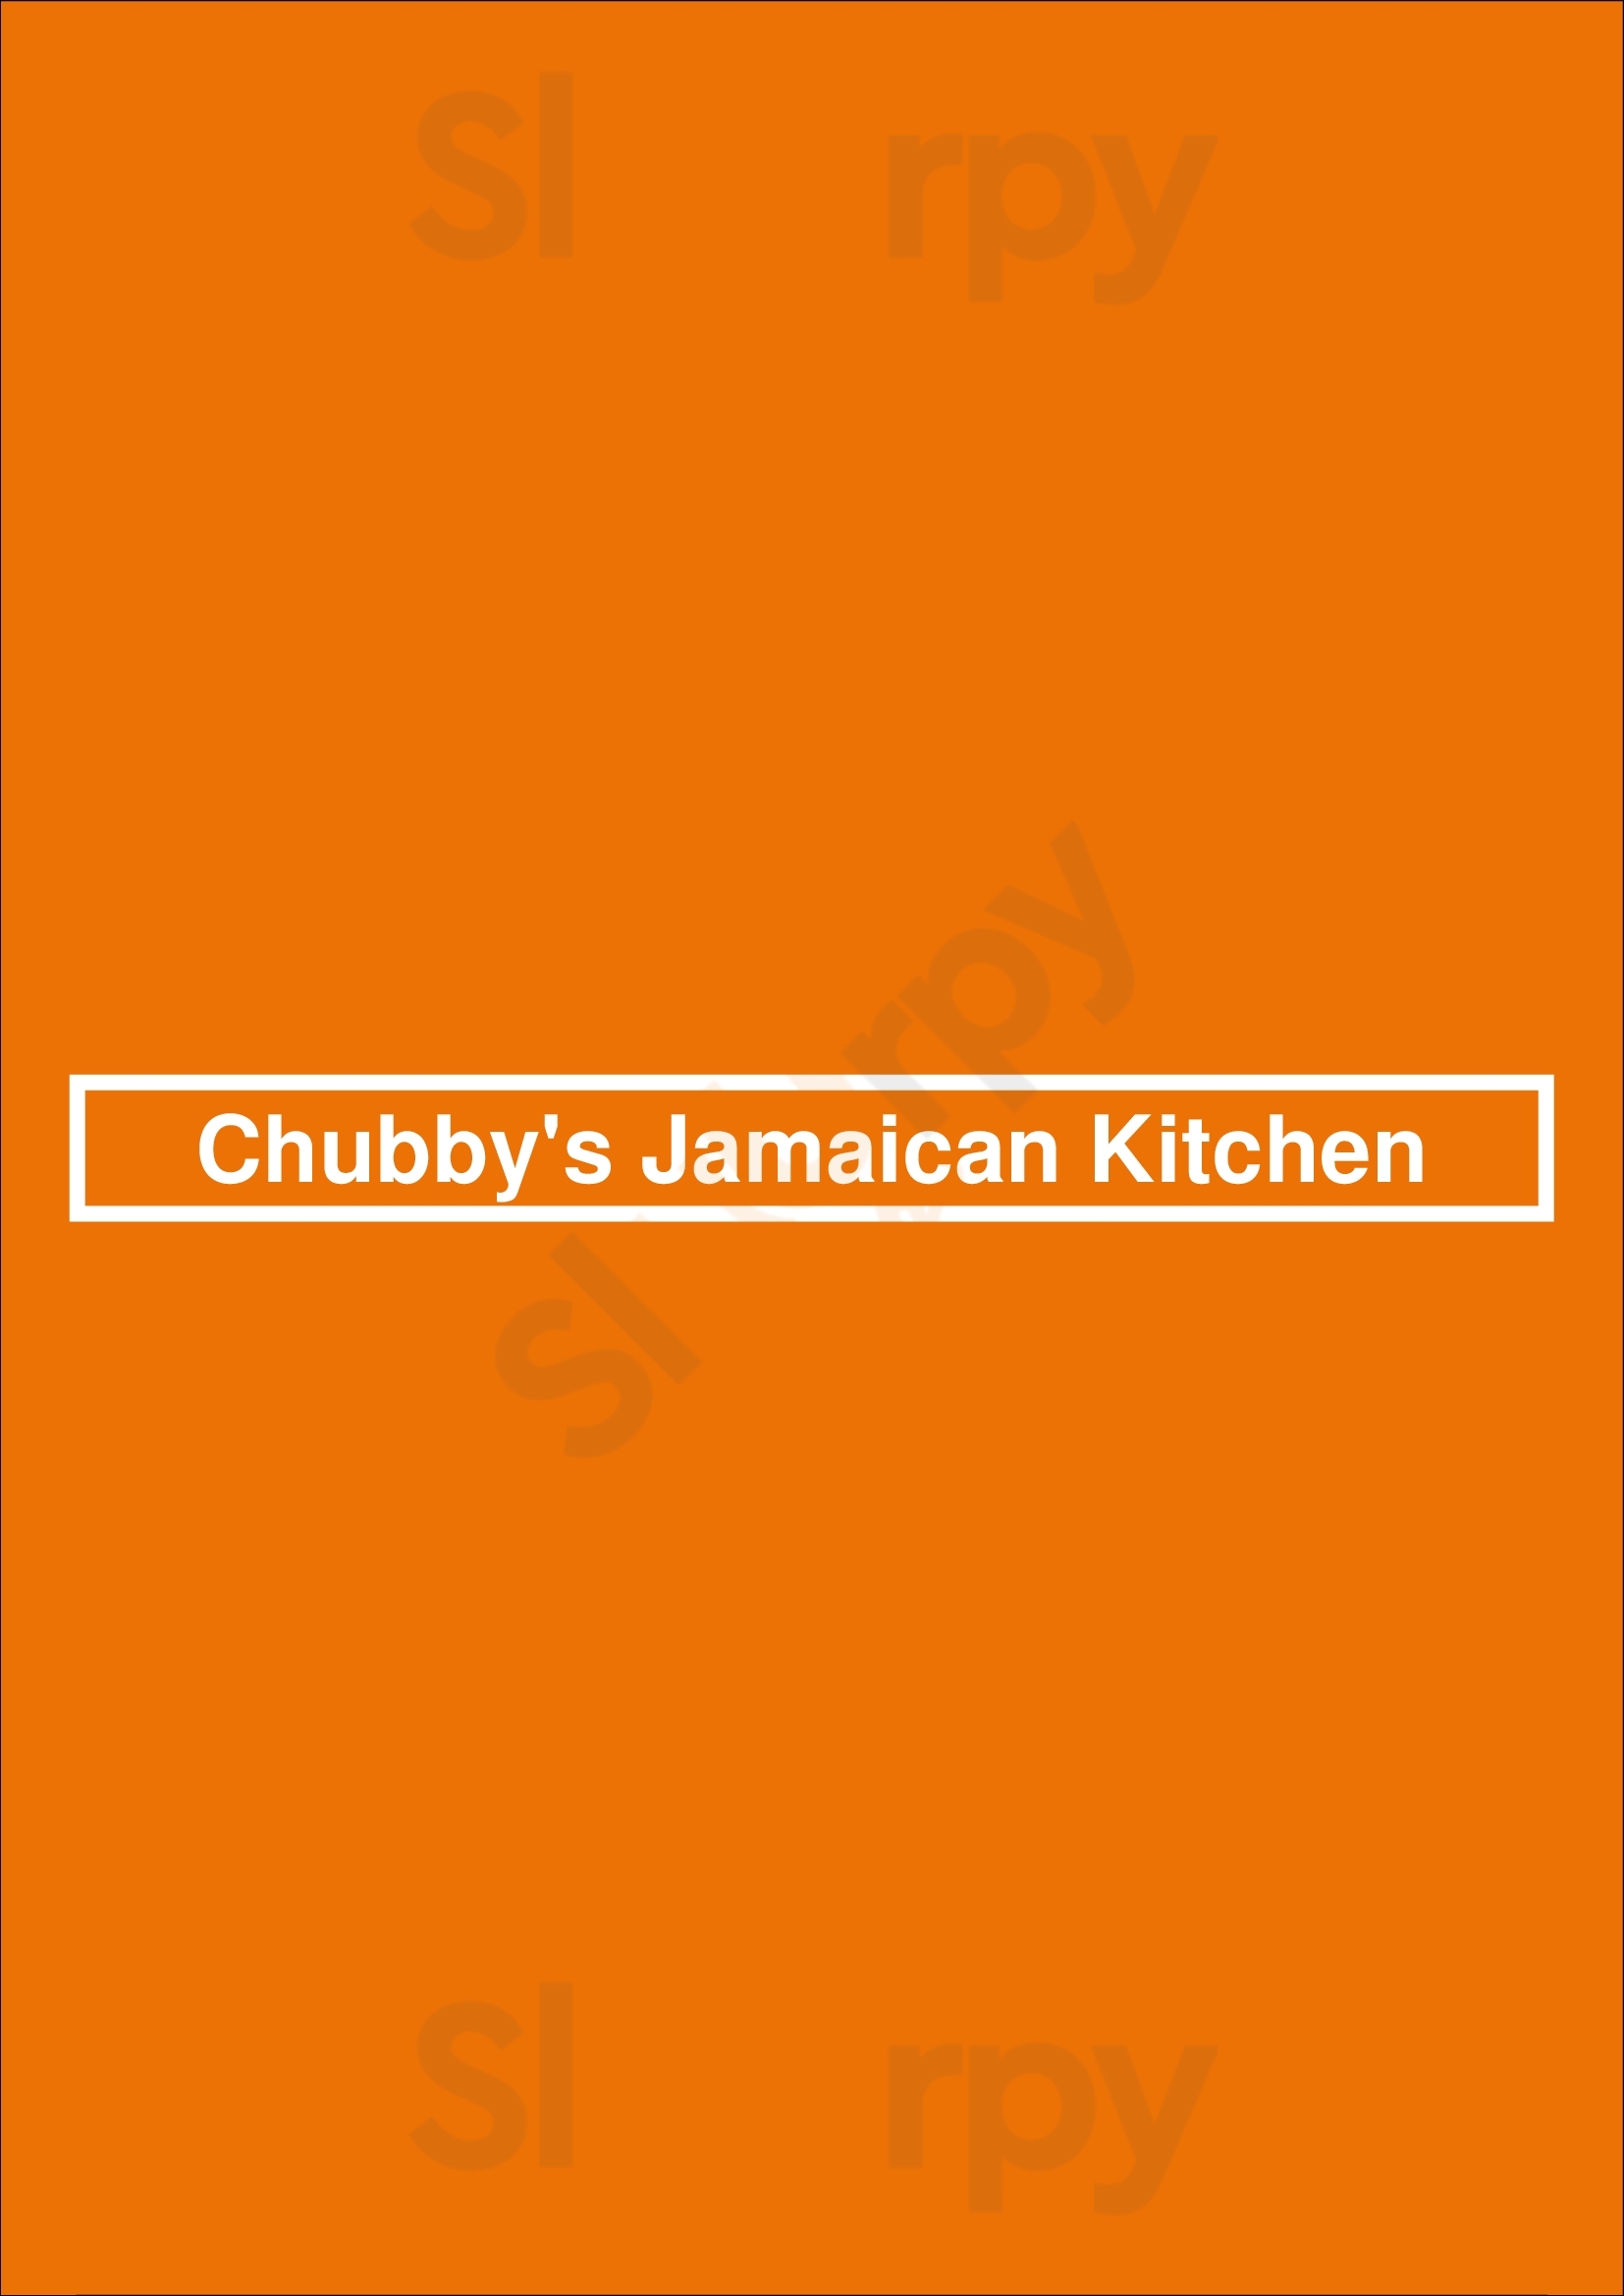 Chubby's Jamaican Kitchen Toronto Menu - 1